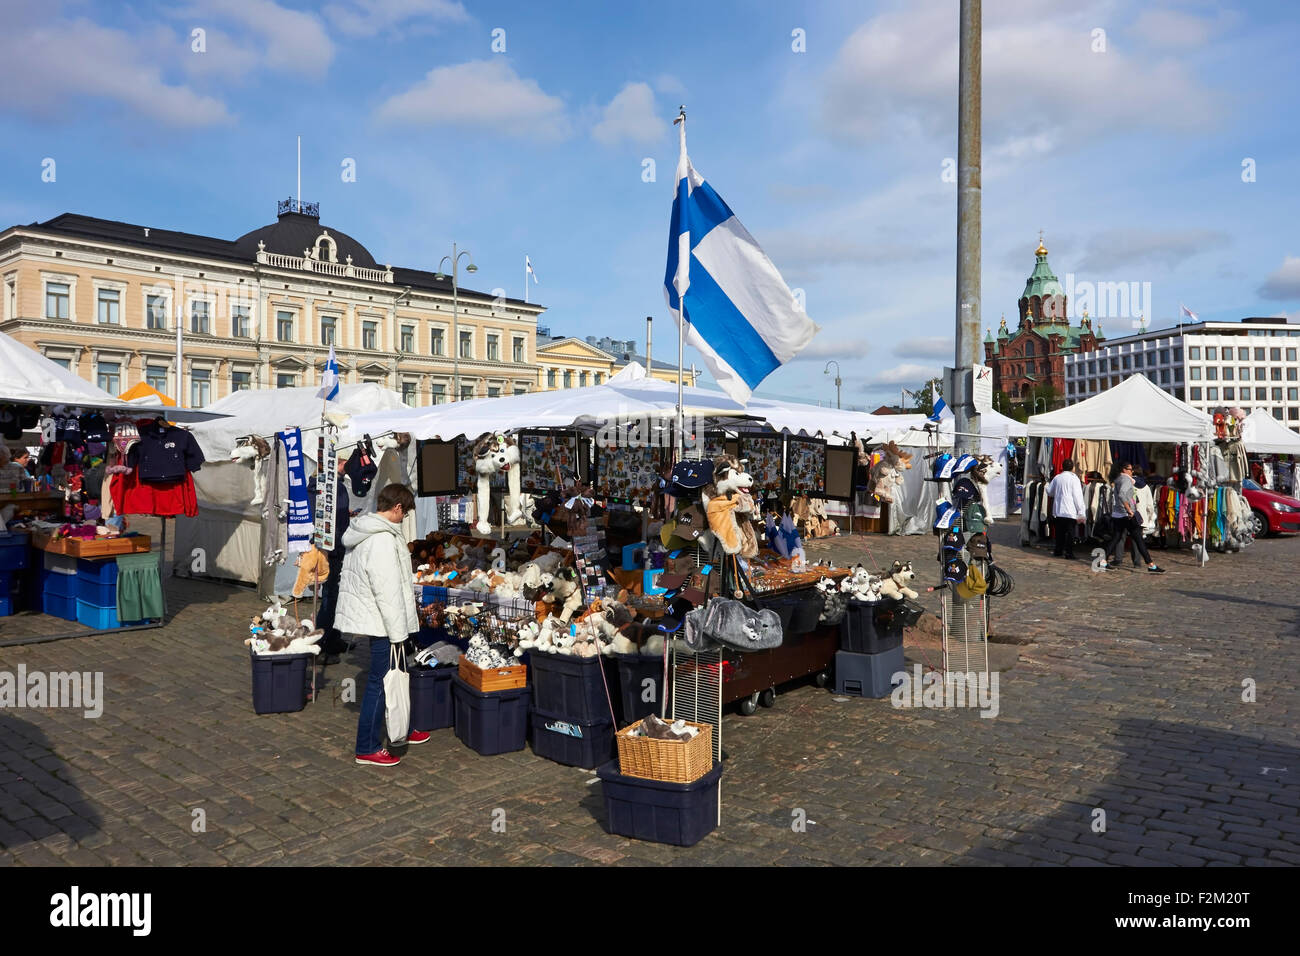 Market Square Kauppatori, Helsinki Finland Stock Photo